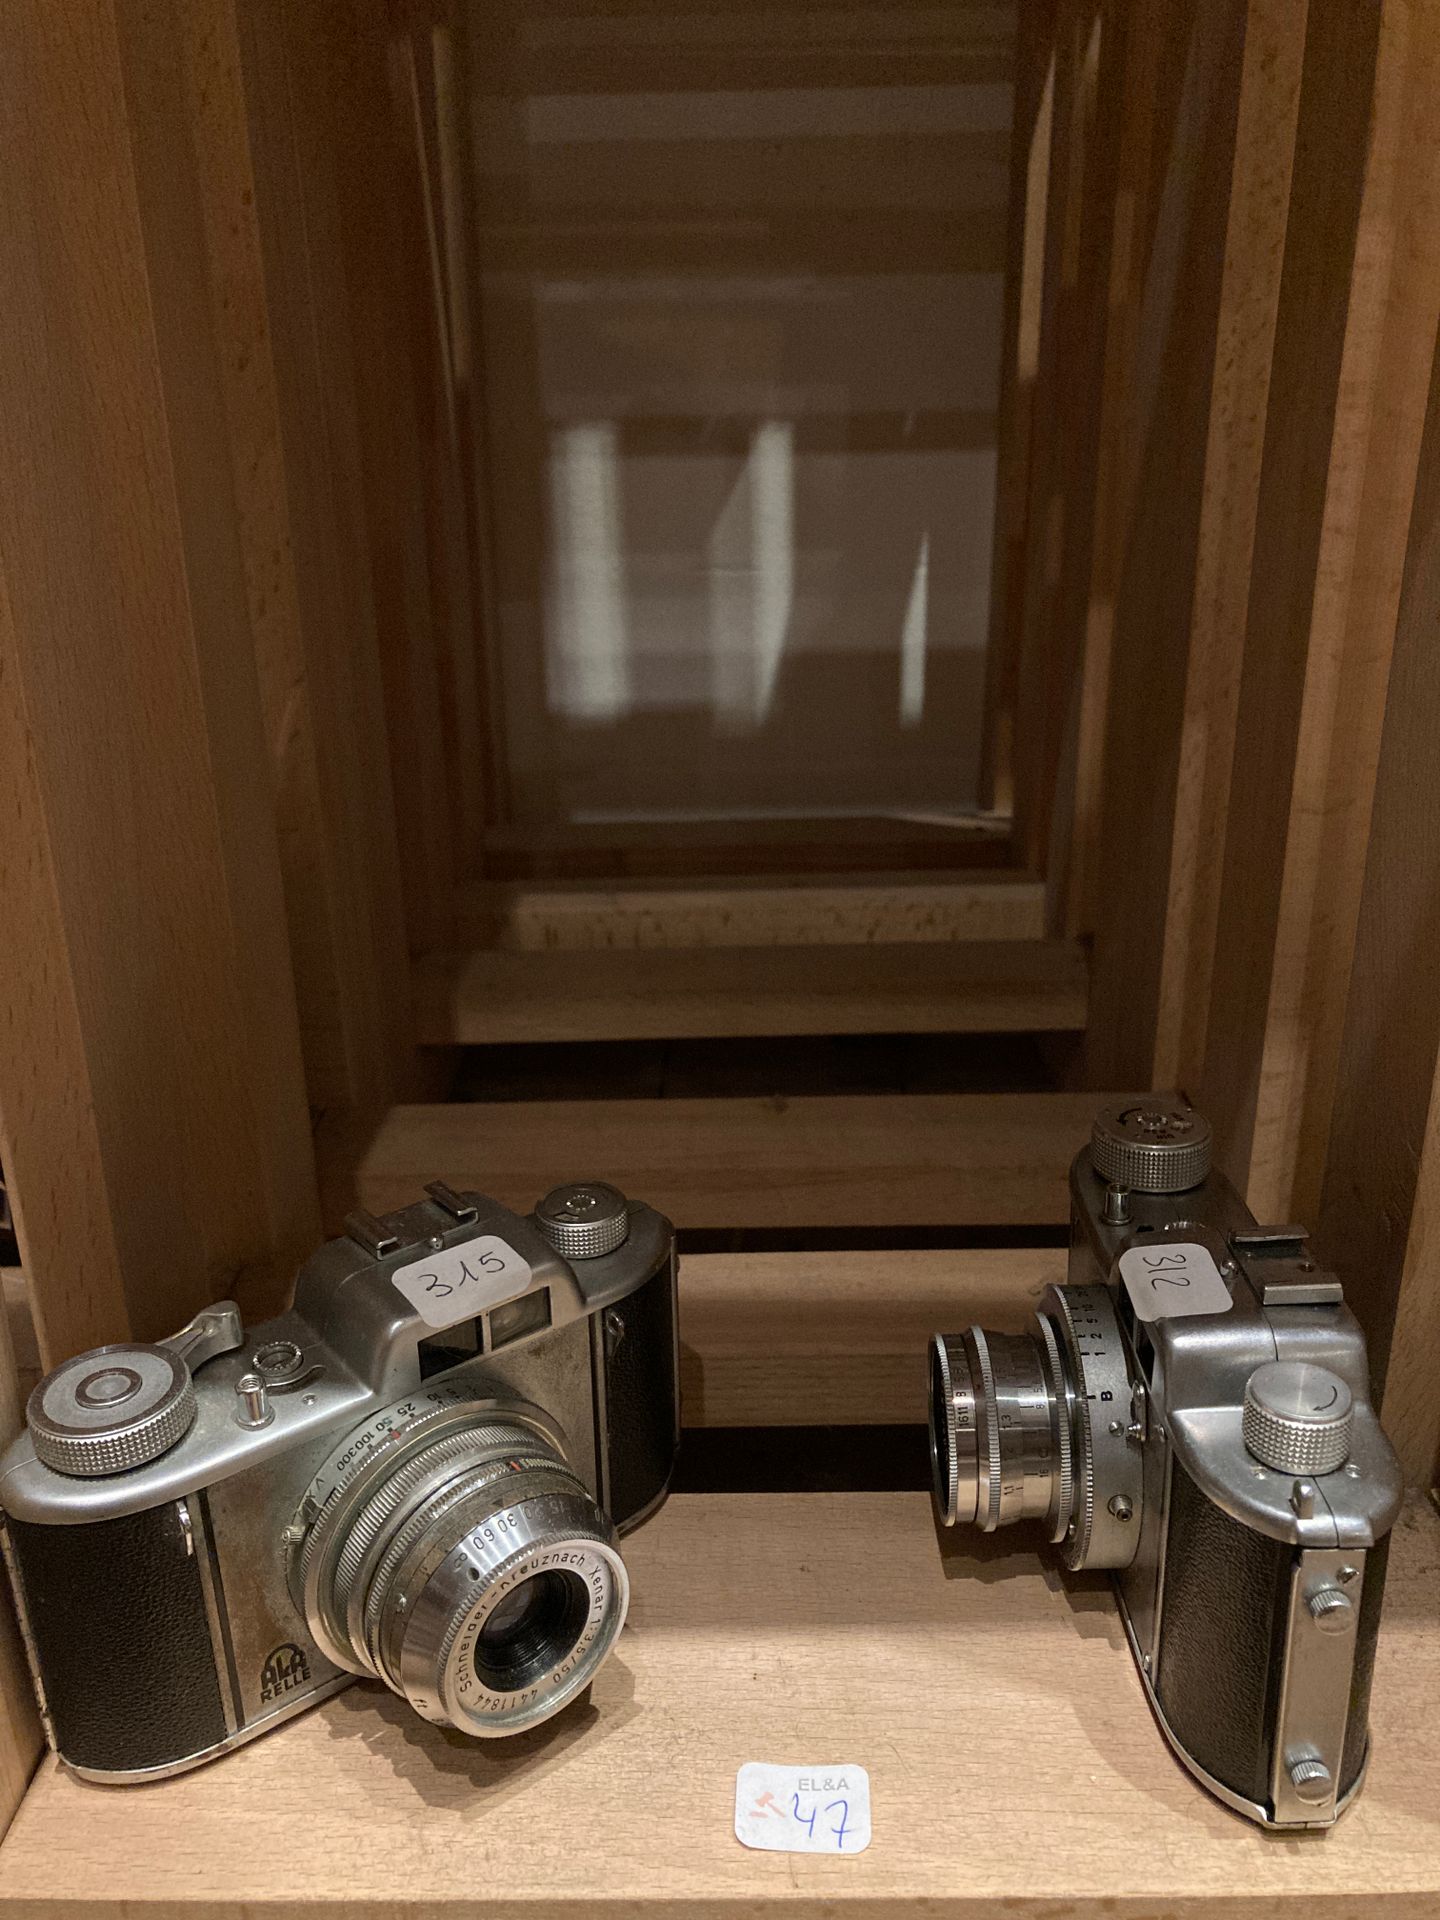 Null 一套两台Akarelle相机，配有Xenar 2.8/45毫米和3.5/50毫米镜头。